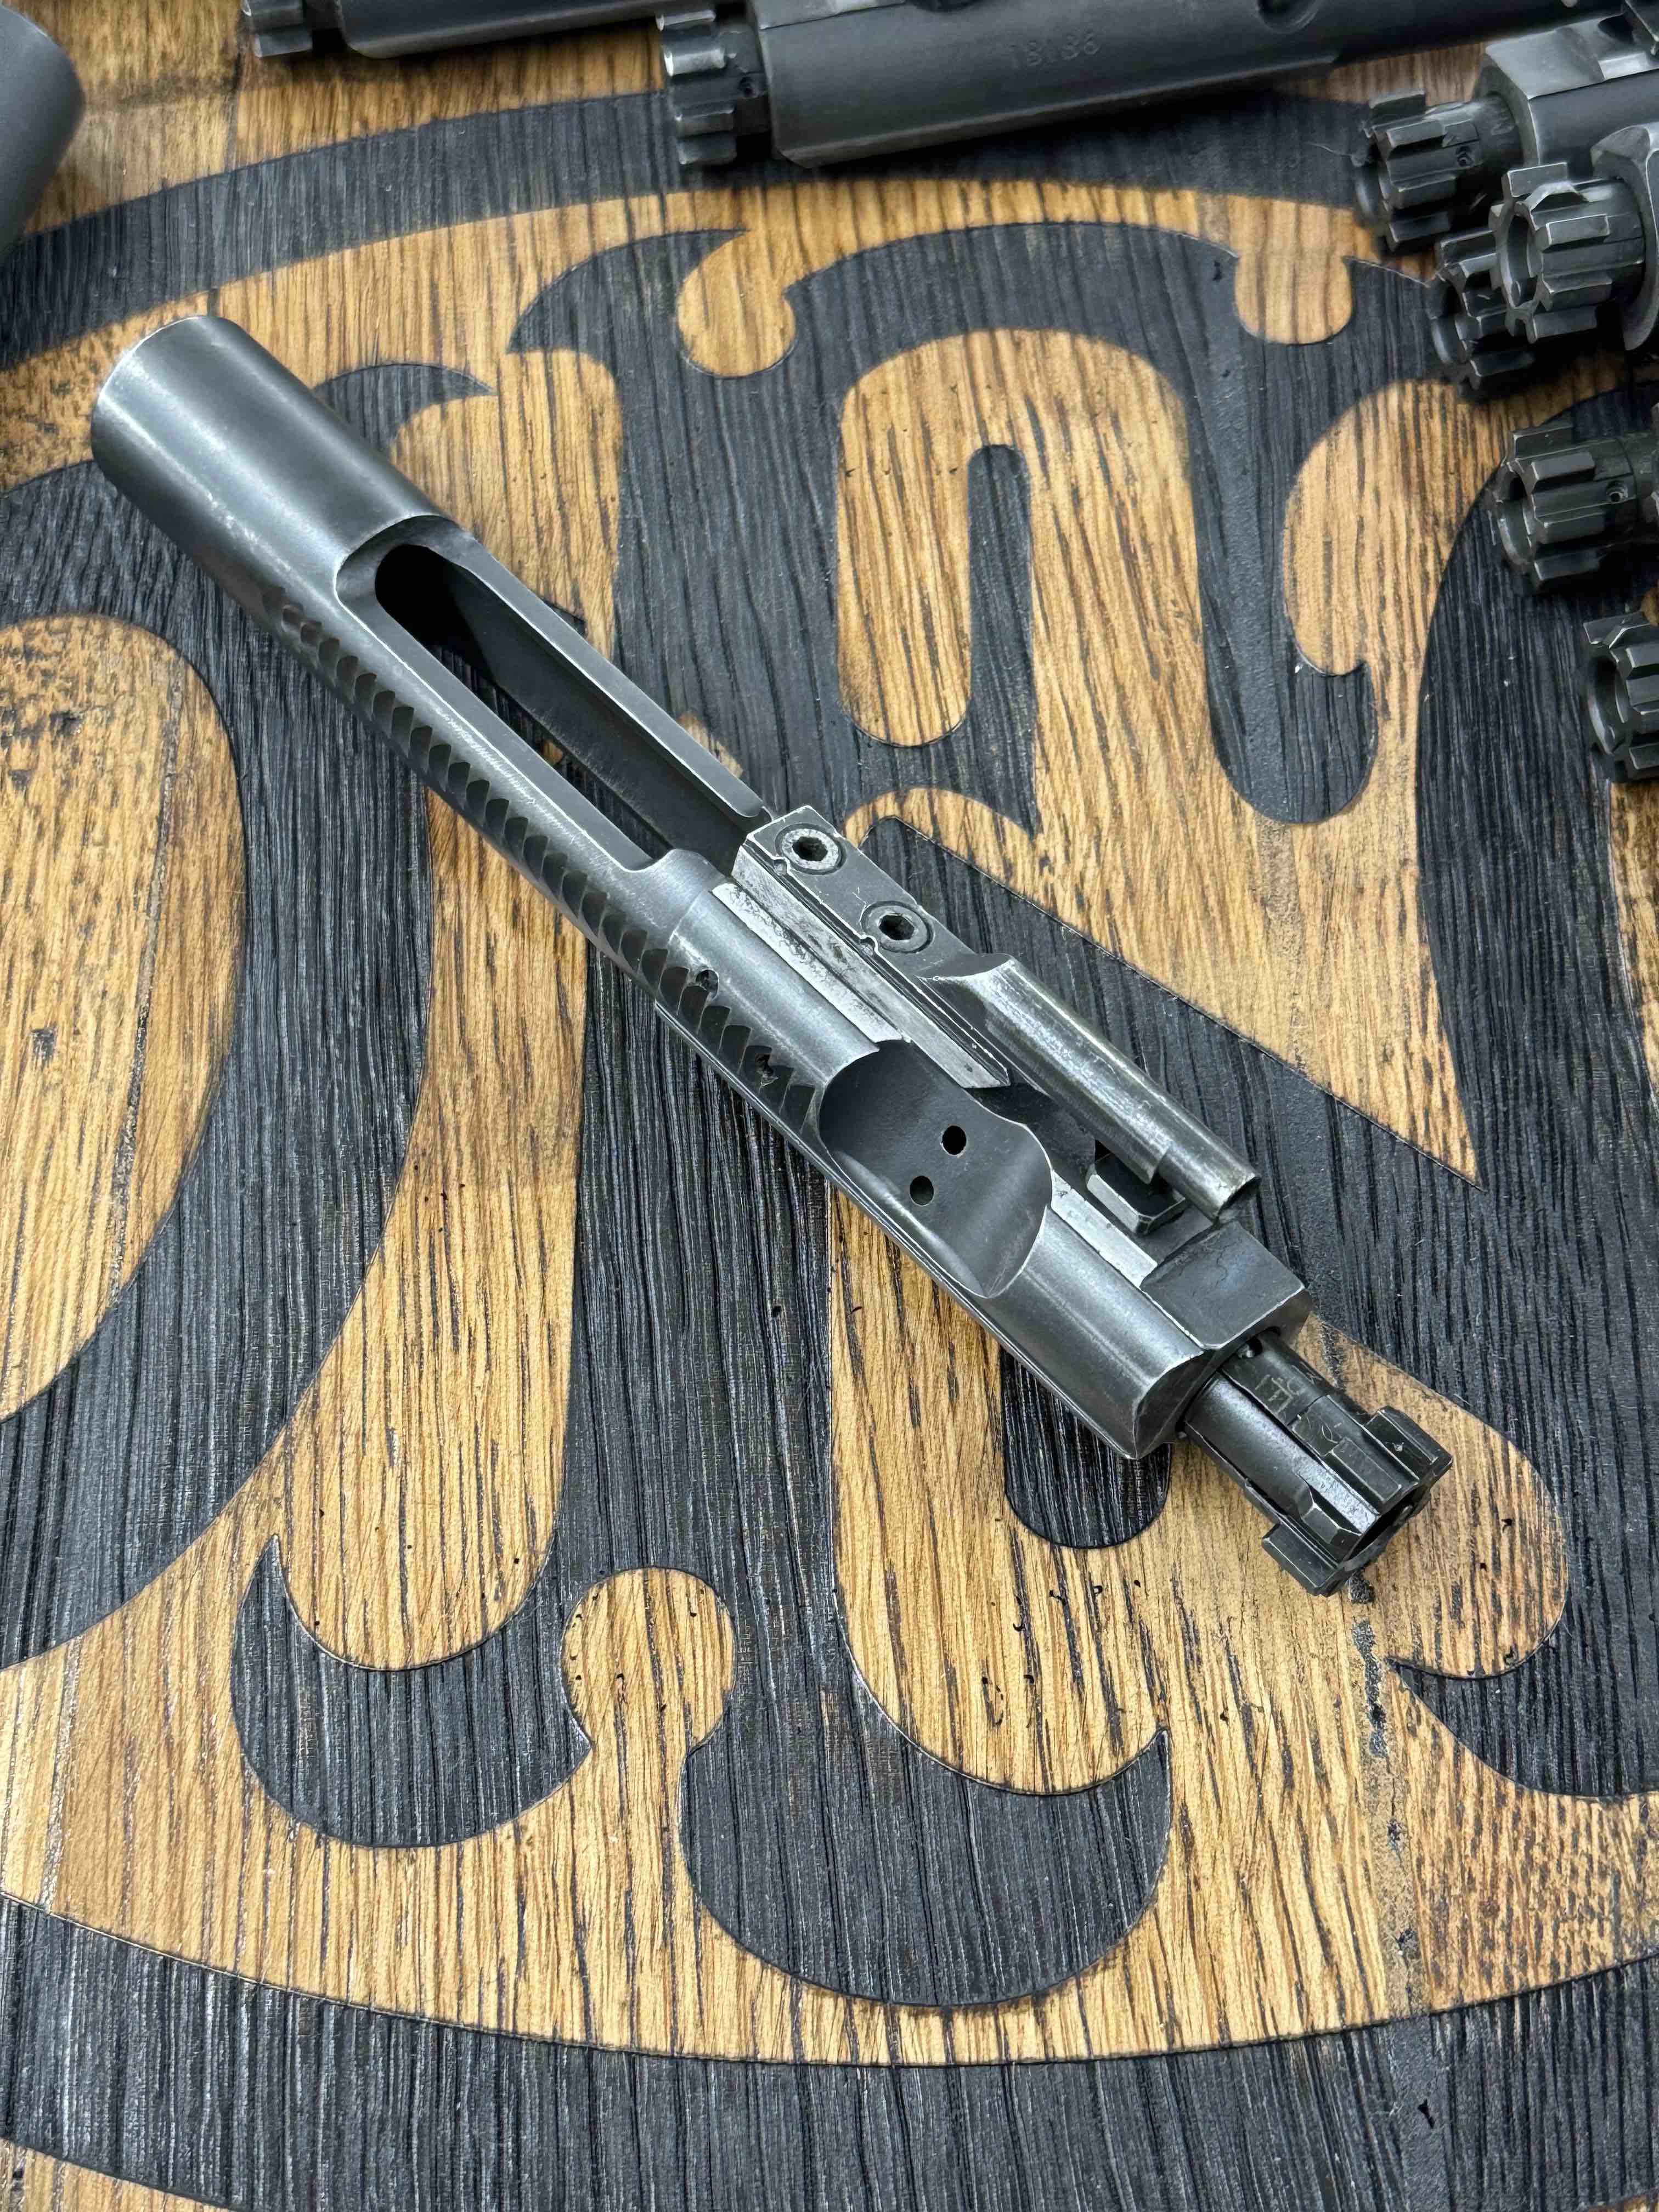 TOOLCRAFT/FN MIL SURPLUS M16 BCG (new bolt)